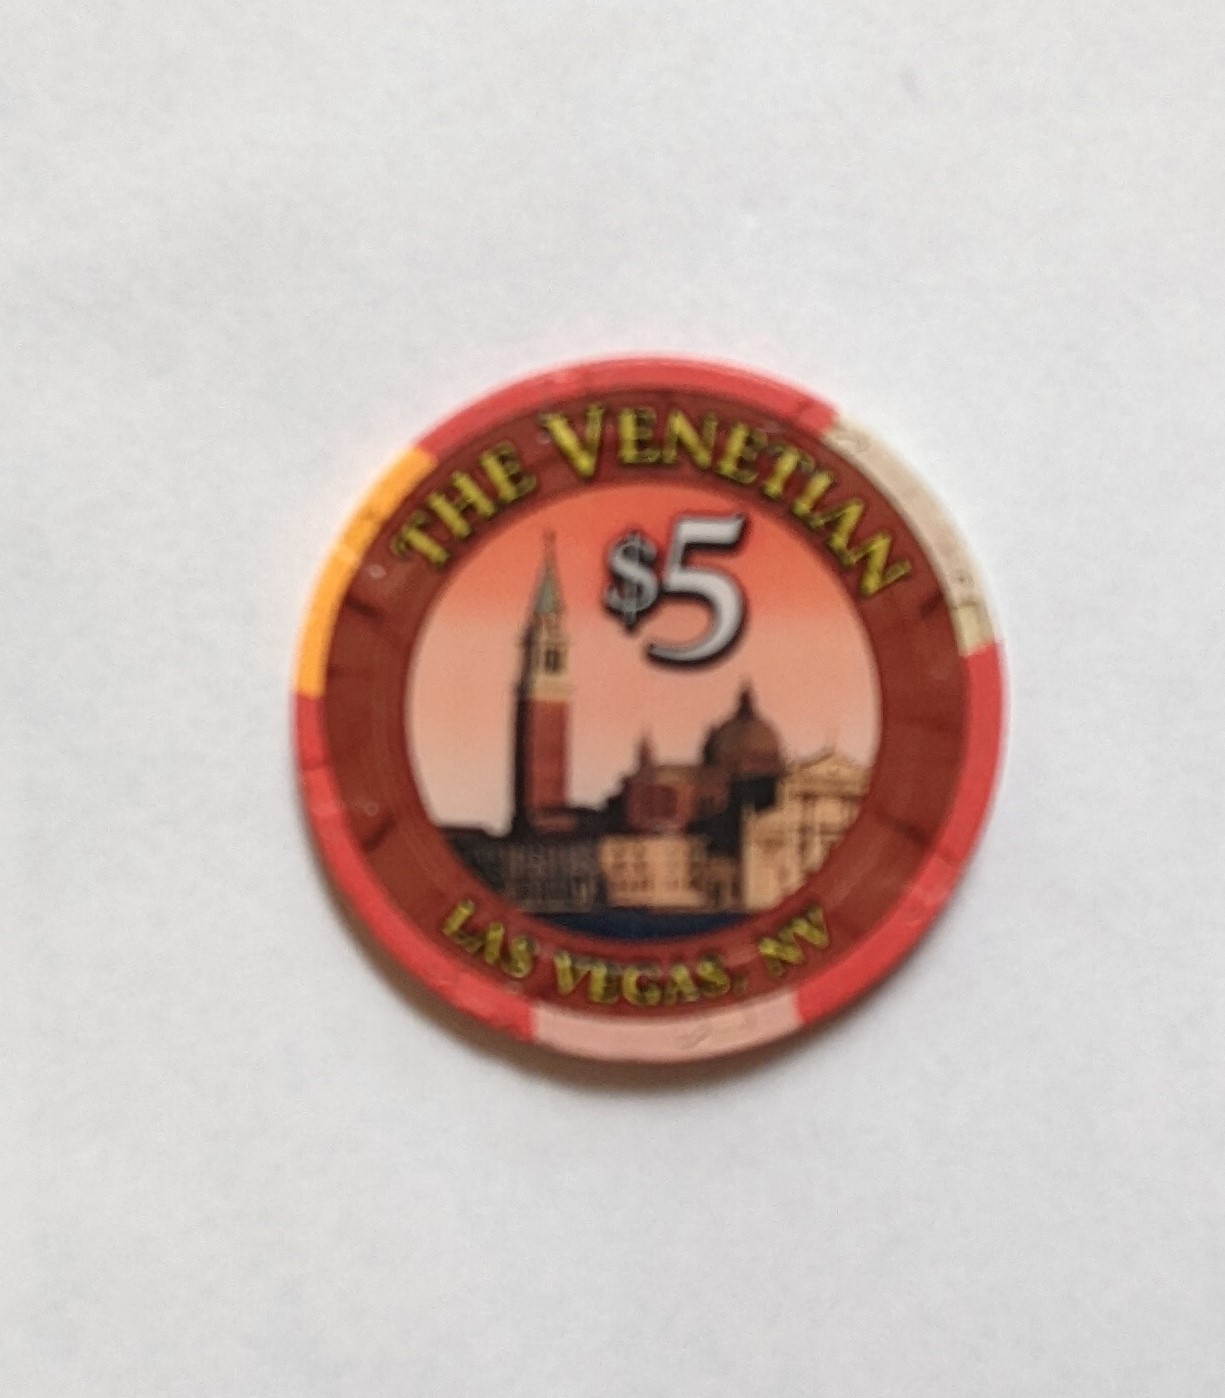 Primary image for  $5 Venetian Hotel Las Vegas Casino Chip